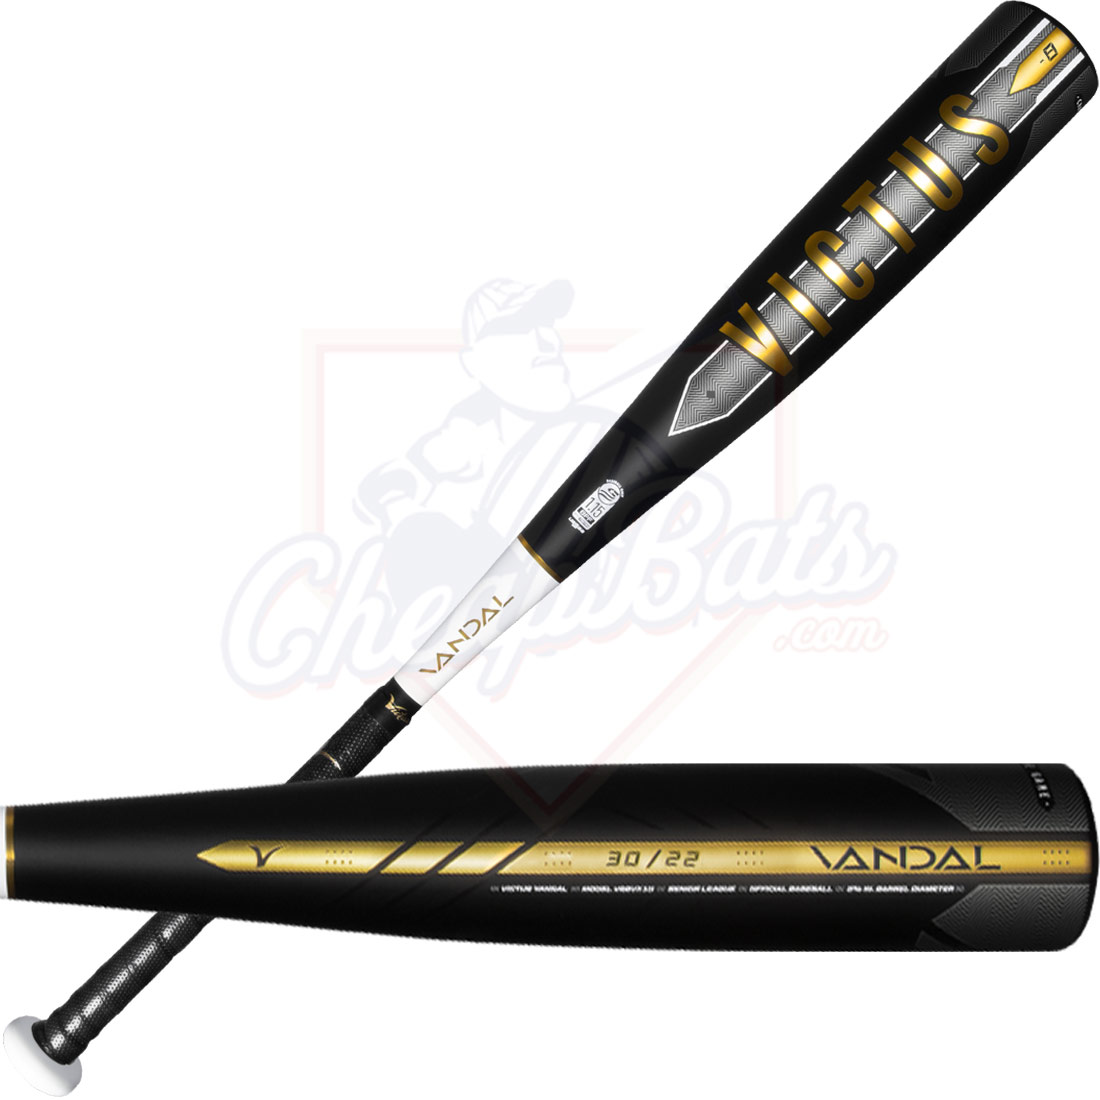 2021 Victus Vandal Youth USSSA Baseball Bat -8oz VSBVX8